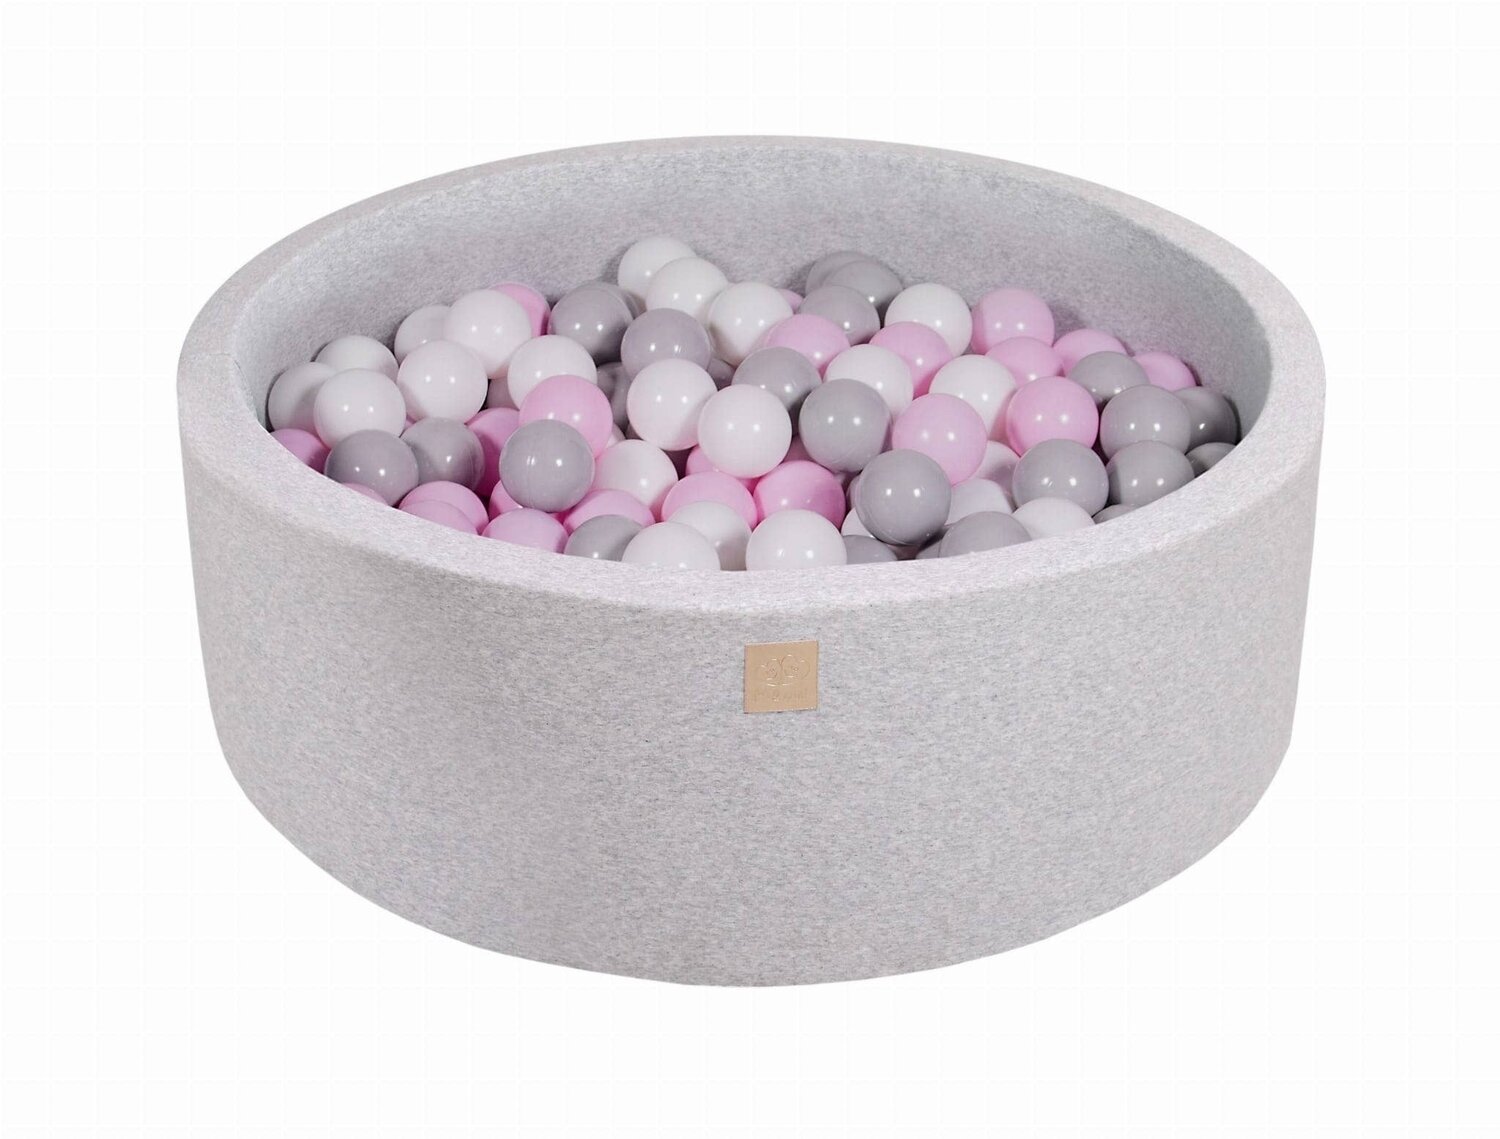 MEOWBABY Foam Ball Pit 90X40cm/300 Balls ∅ 7Cm Baby Ball Pool Certified Made In EU Light Grey 90 x 40 cm, Light Grey: Transparent/Grey/White/Light Pink/Mint